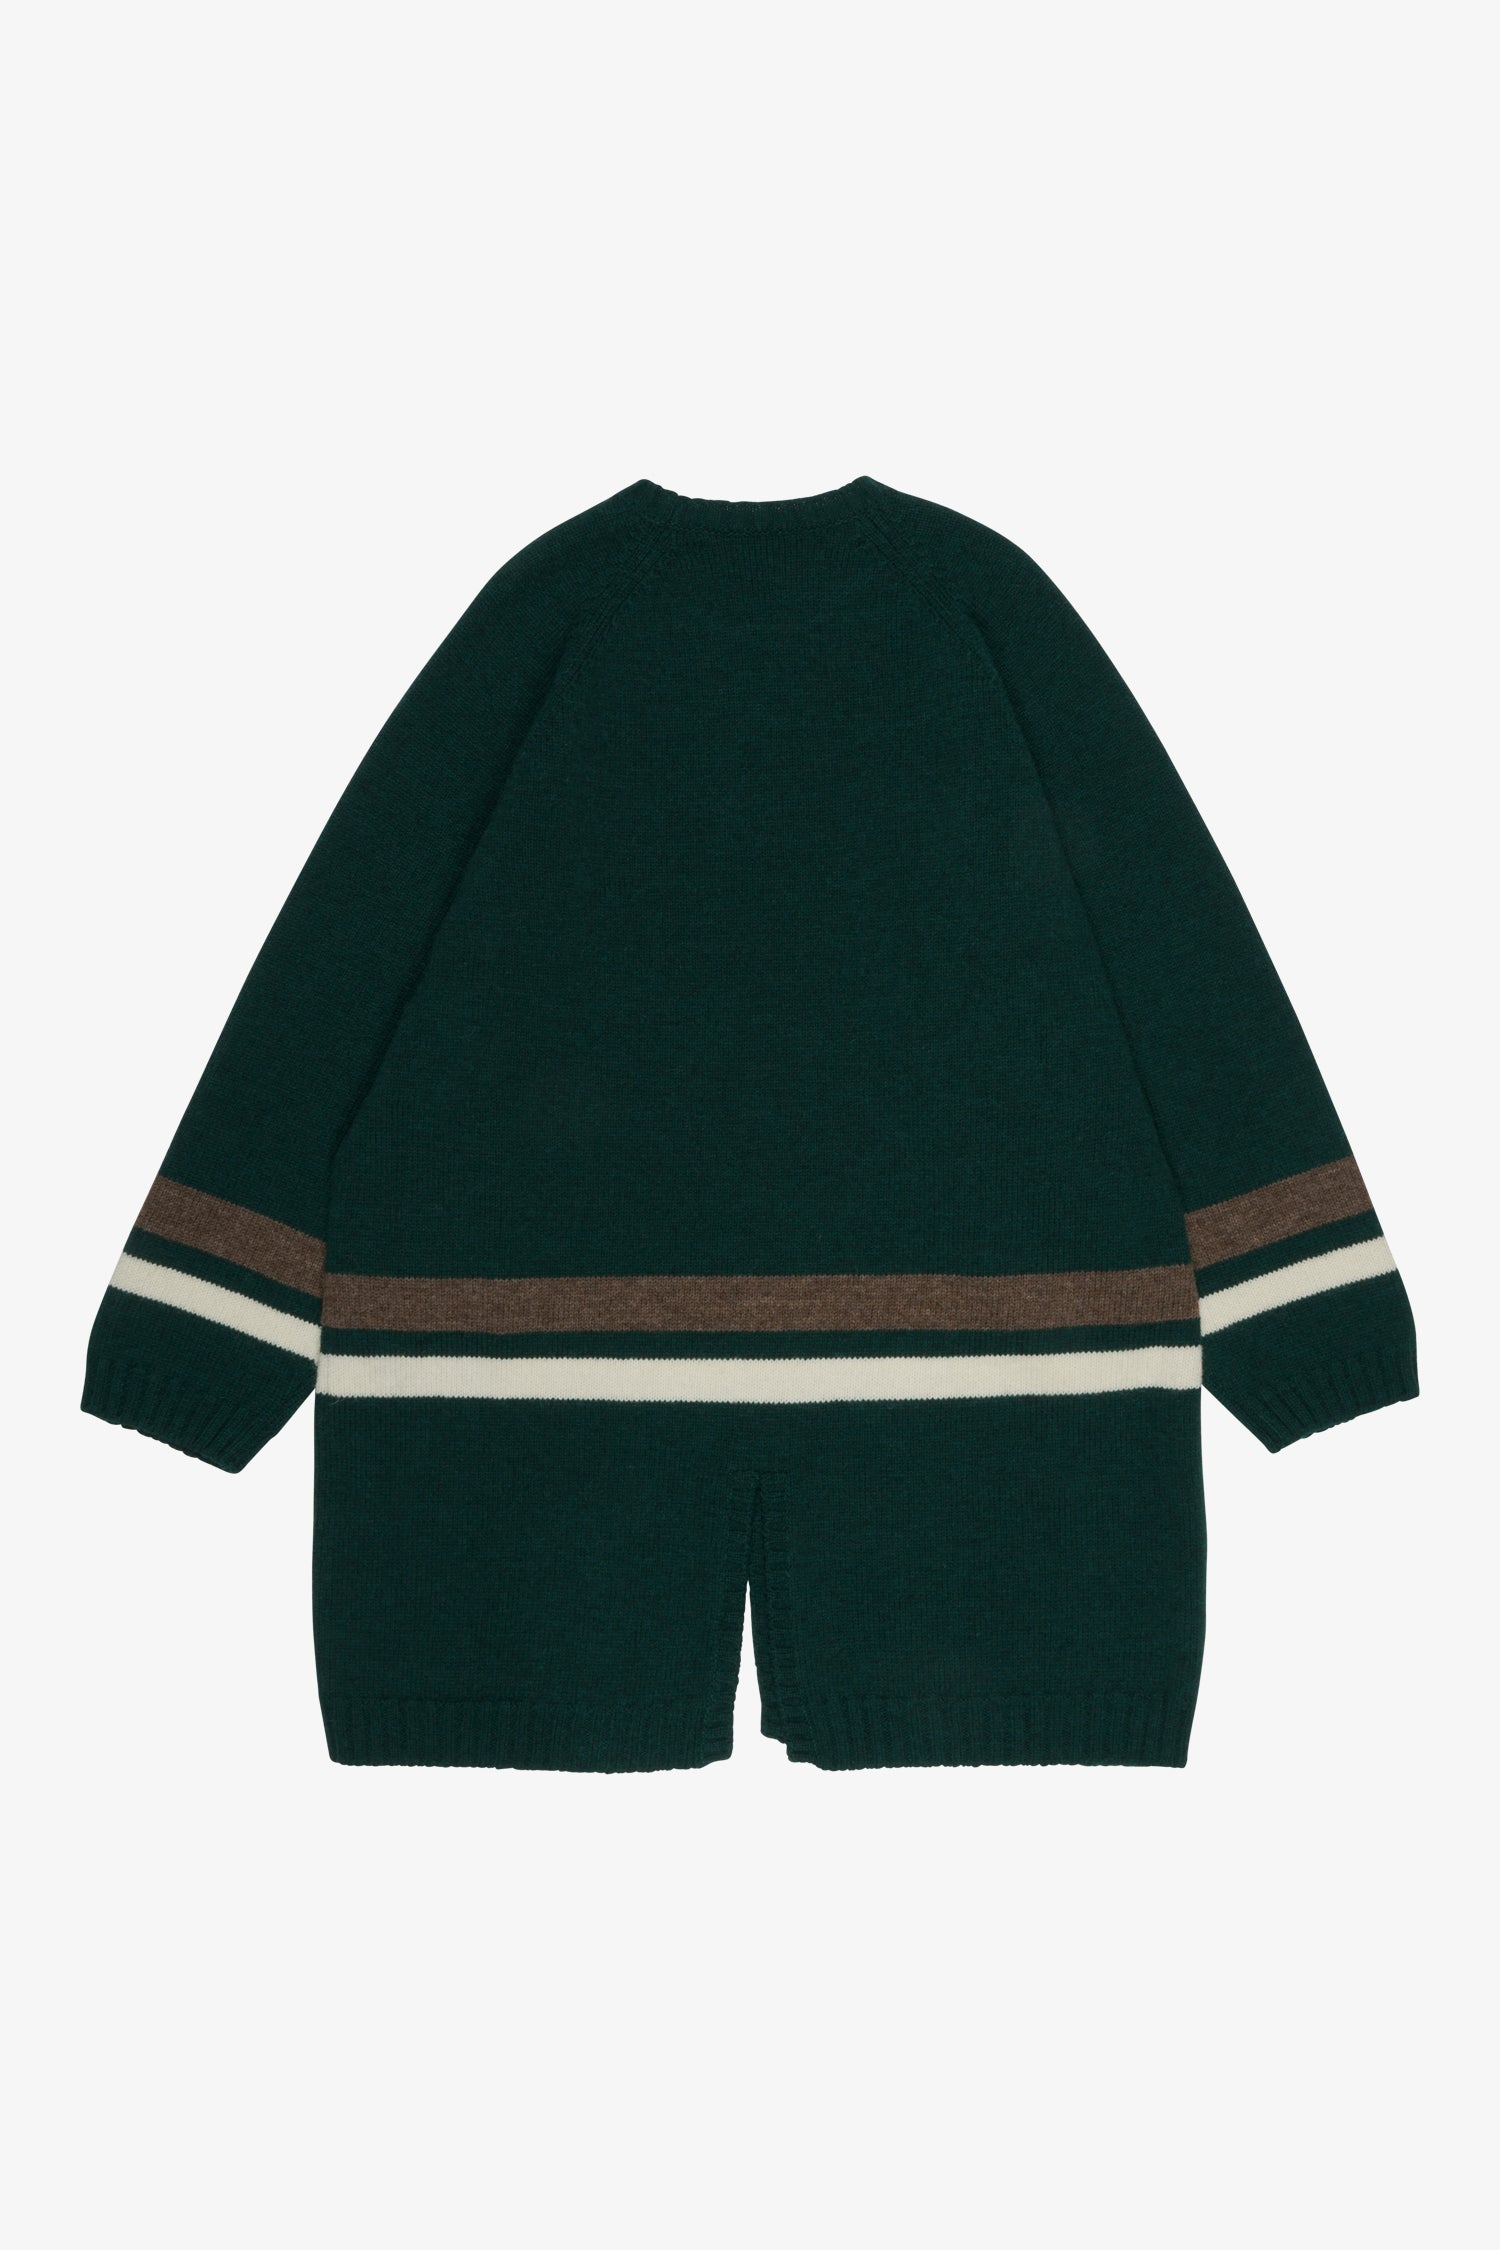 Selectshop FRAME - UNDERCOVER Spider's Web Forest Sweater Sweatshirts Dubai